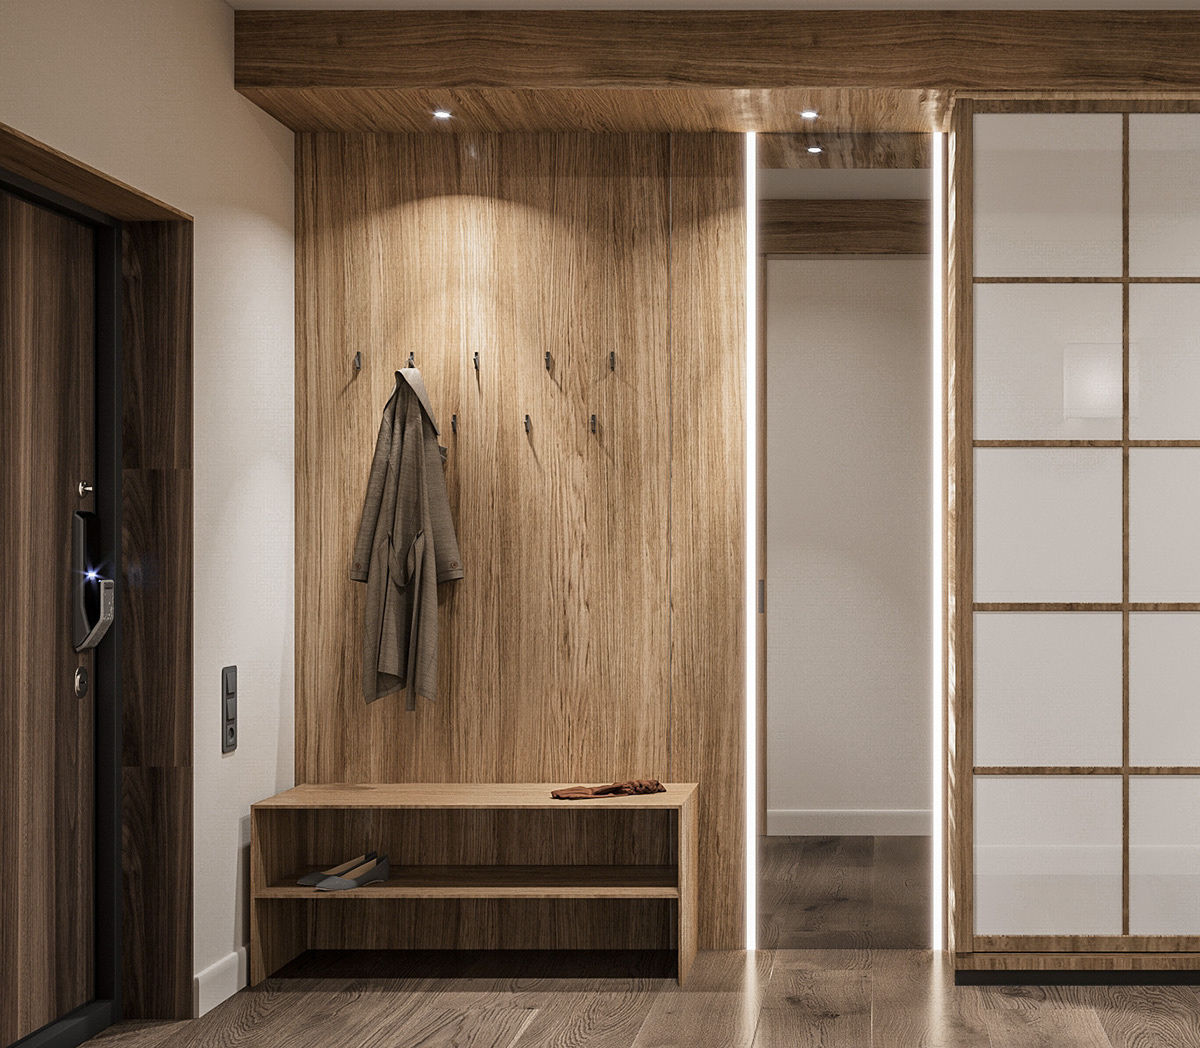 japan
minimalism
home
design interior
